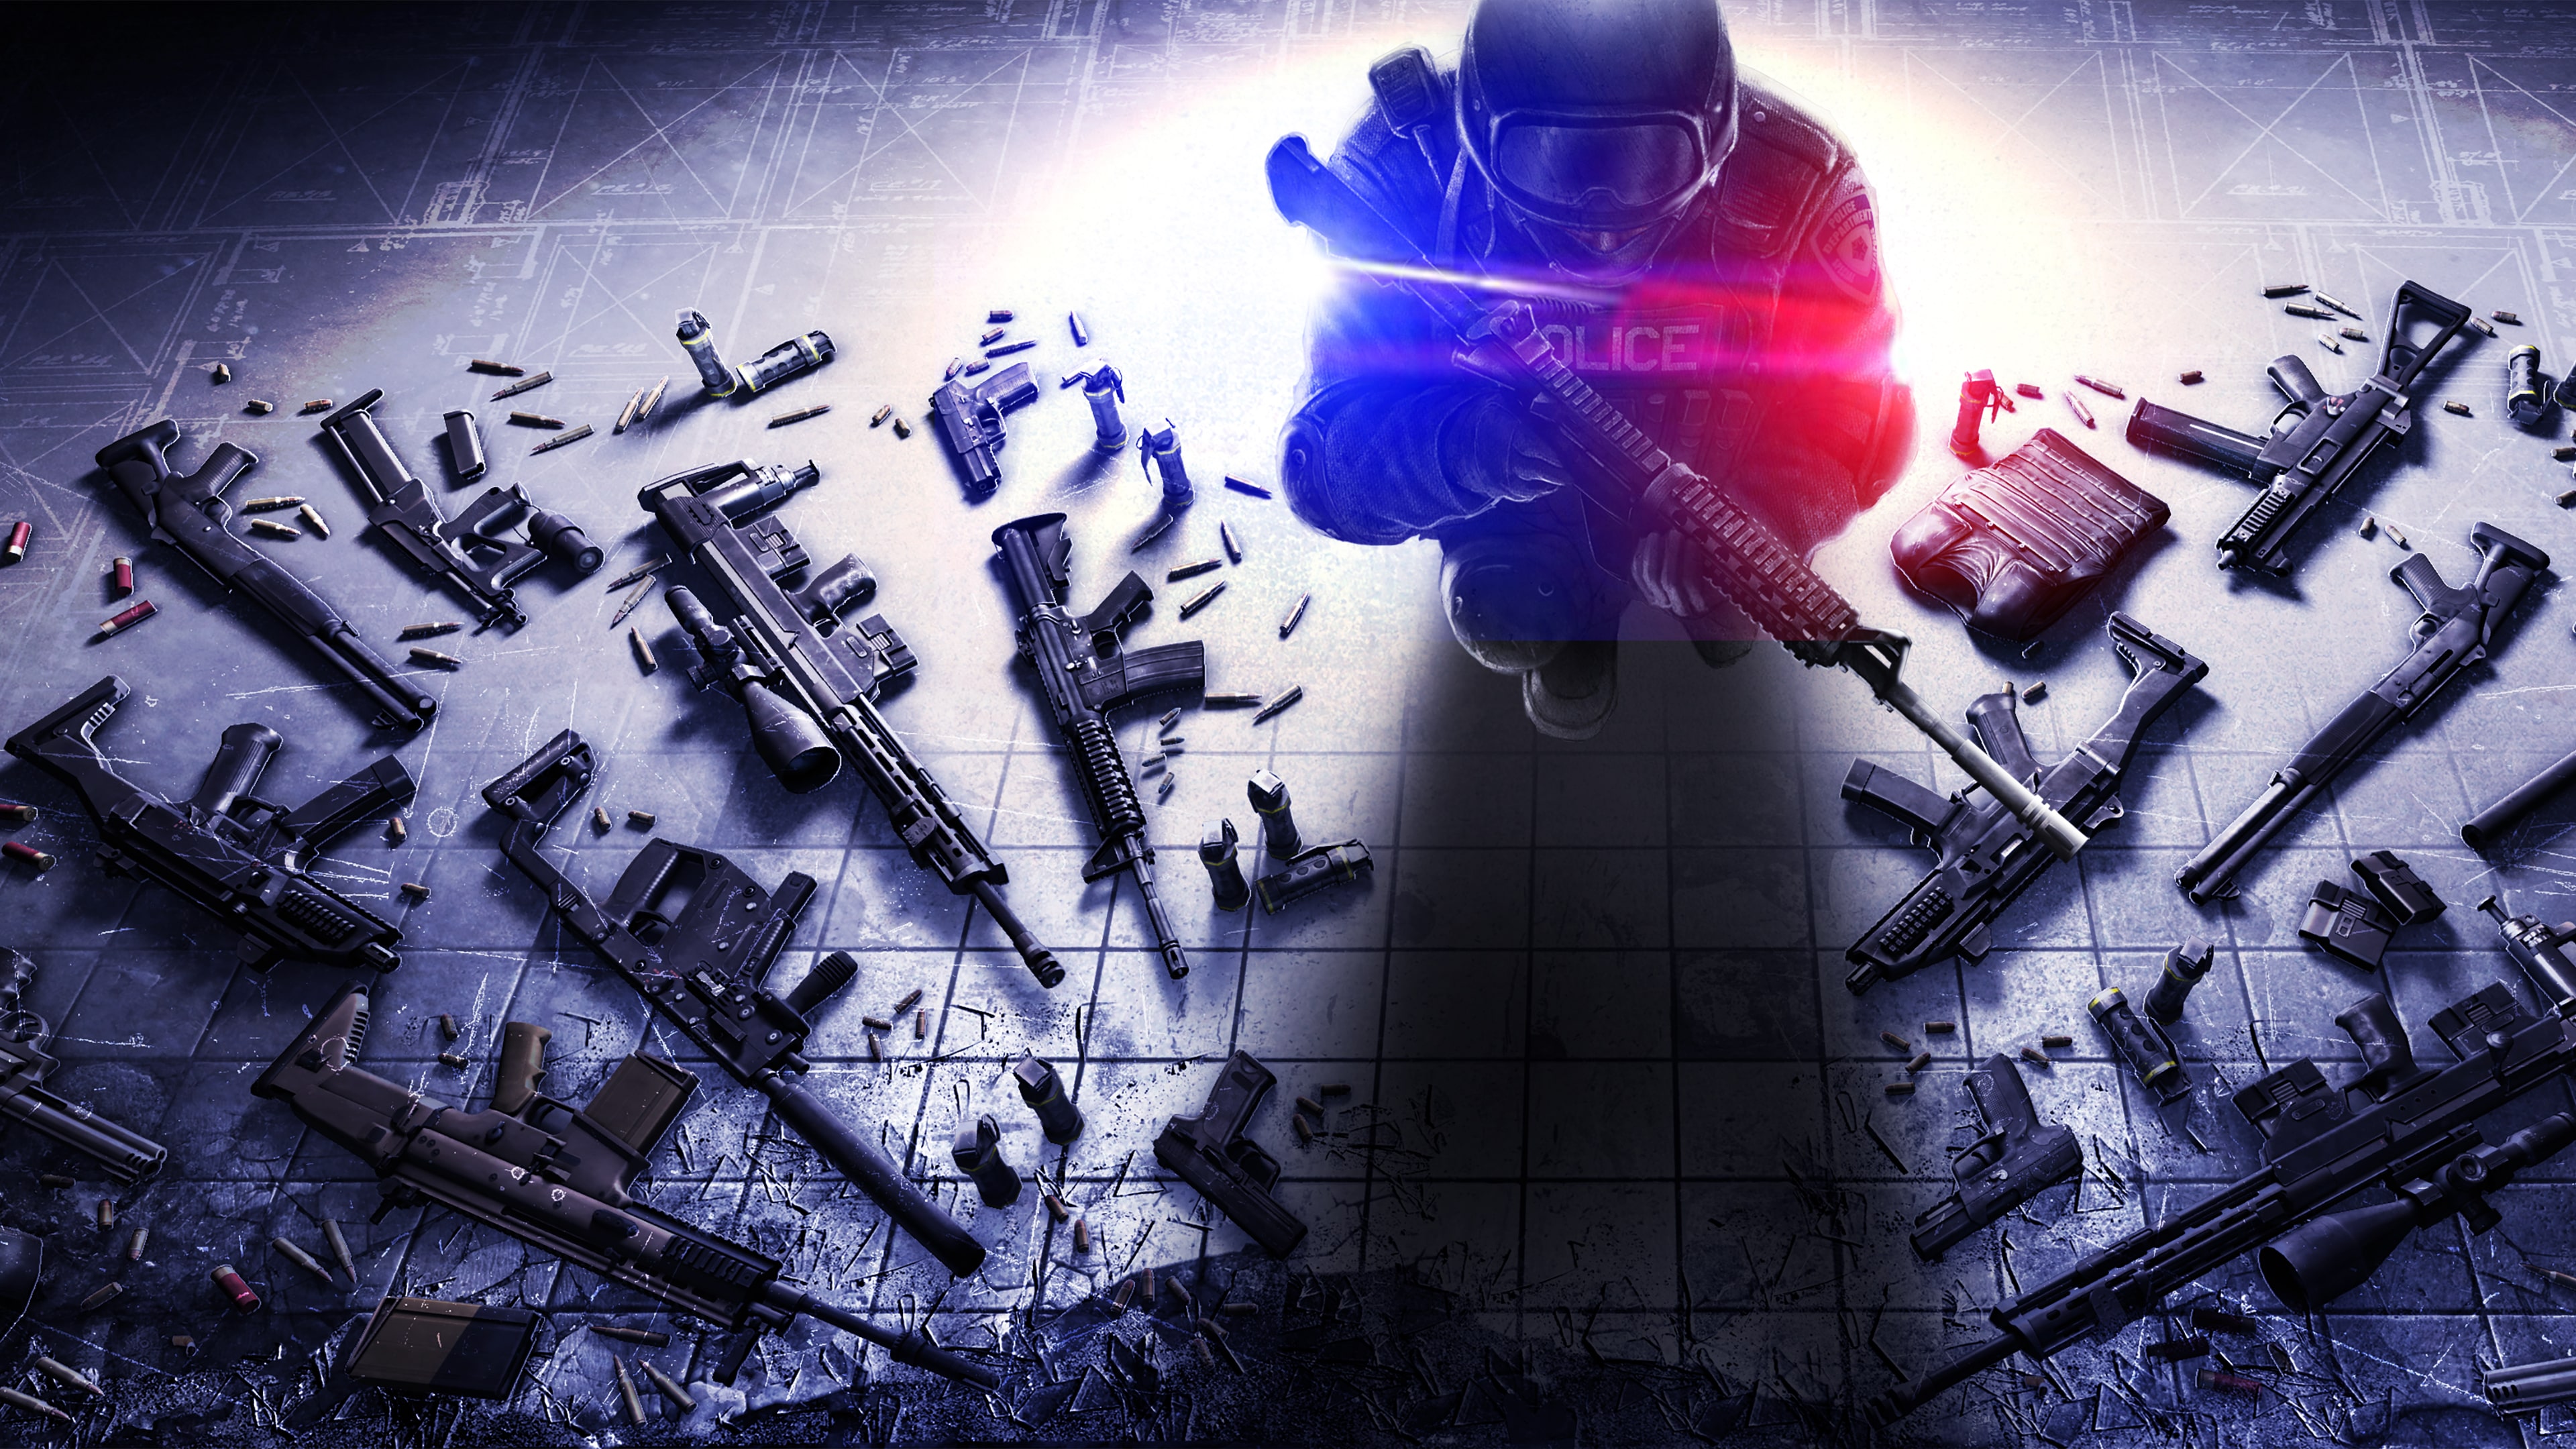 Gun Club VR: SWAT (English Ver.)